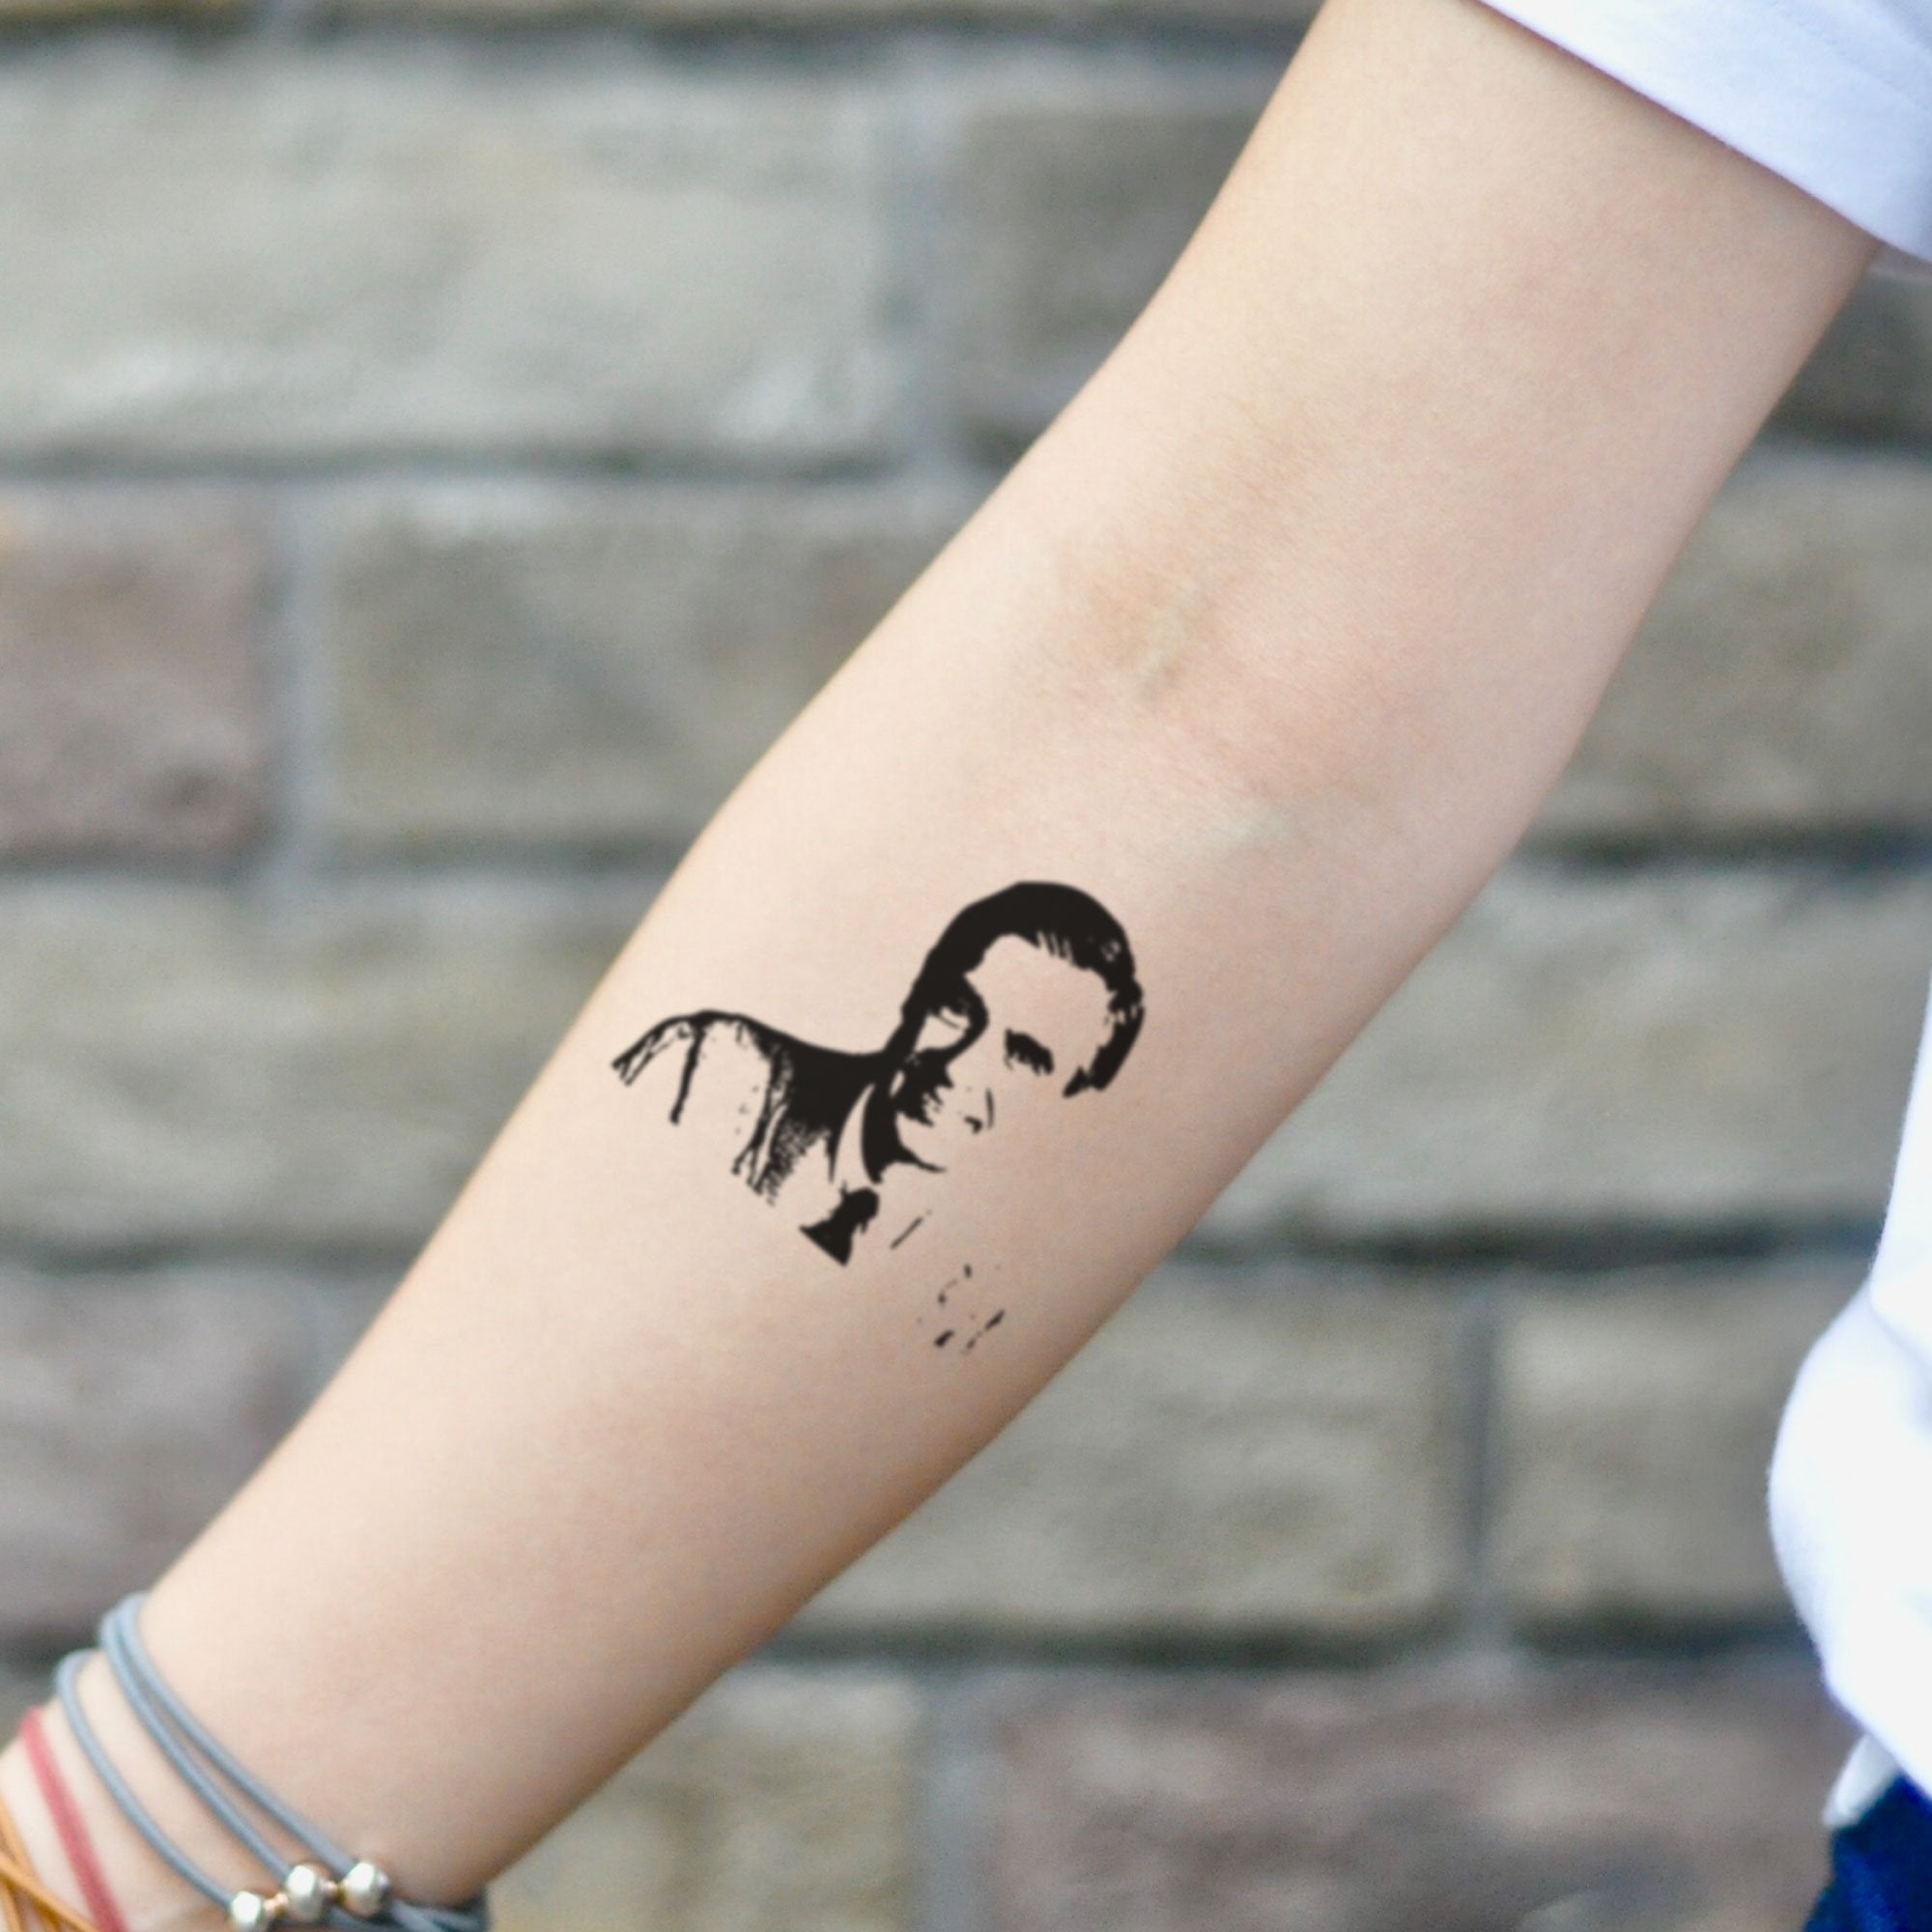 Trishul dhairya name tattoo design Mr Tattooholic ahmedabad | Cool wrist  tattoos, Name tattoo designs, Tattoo designs